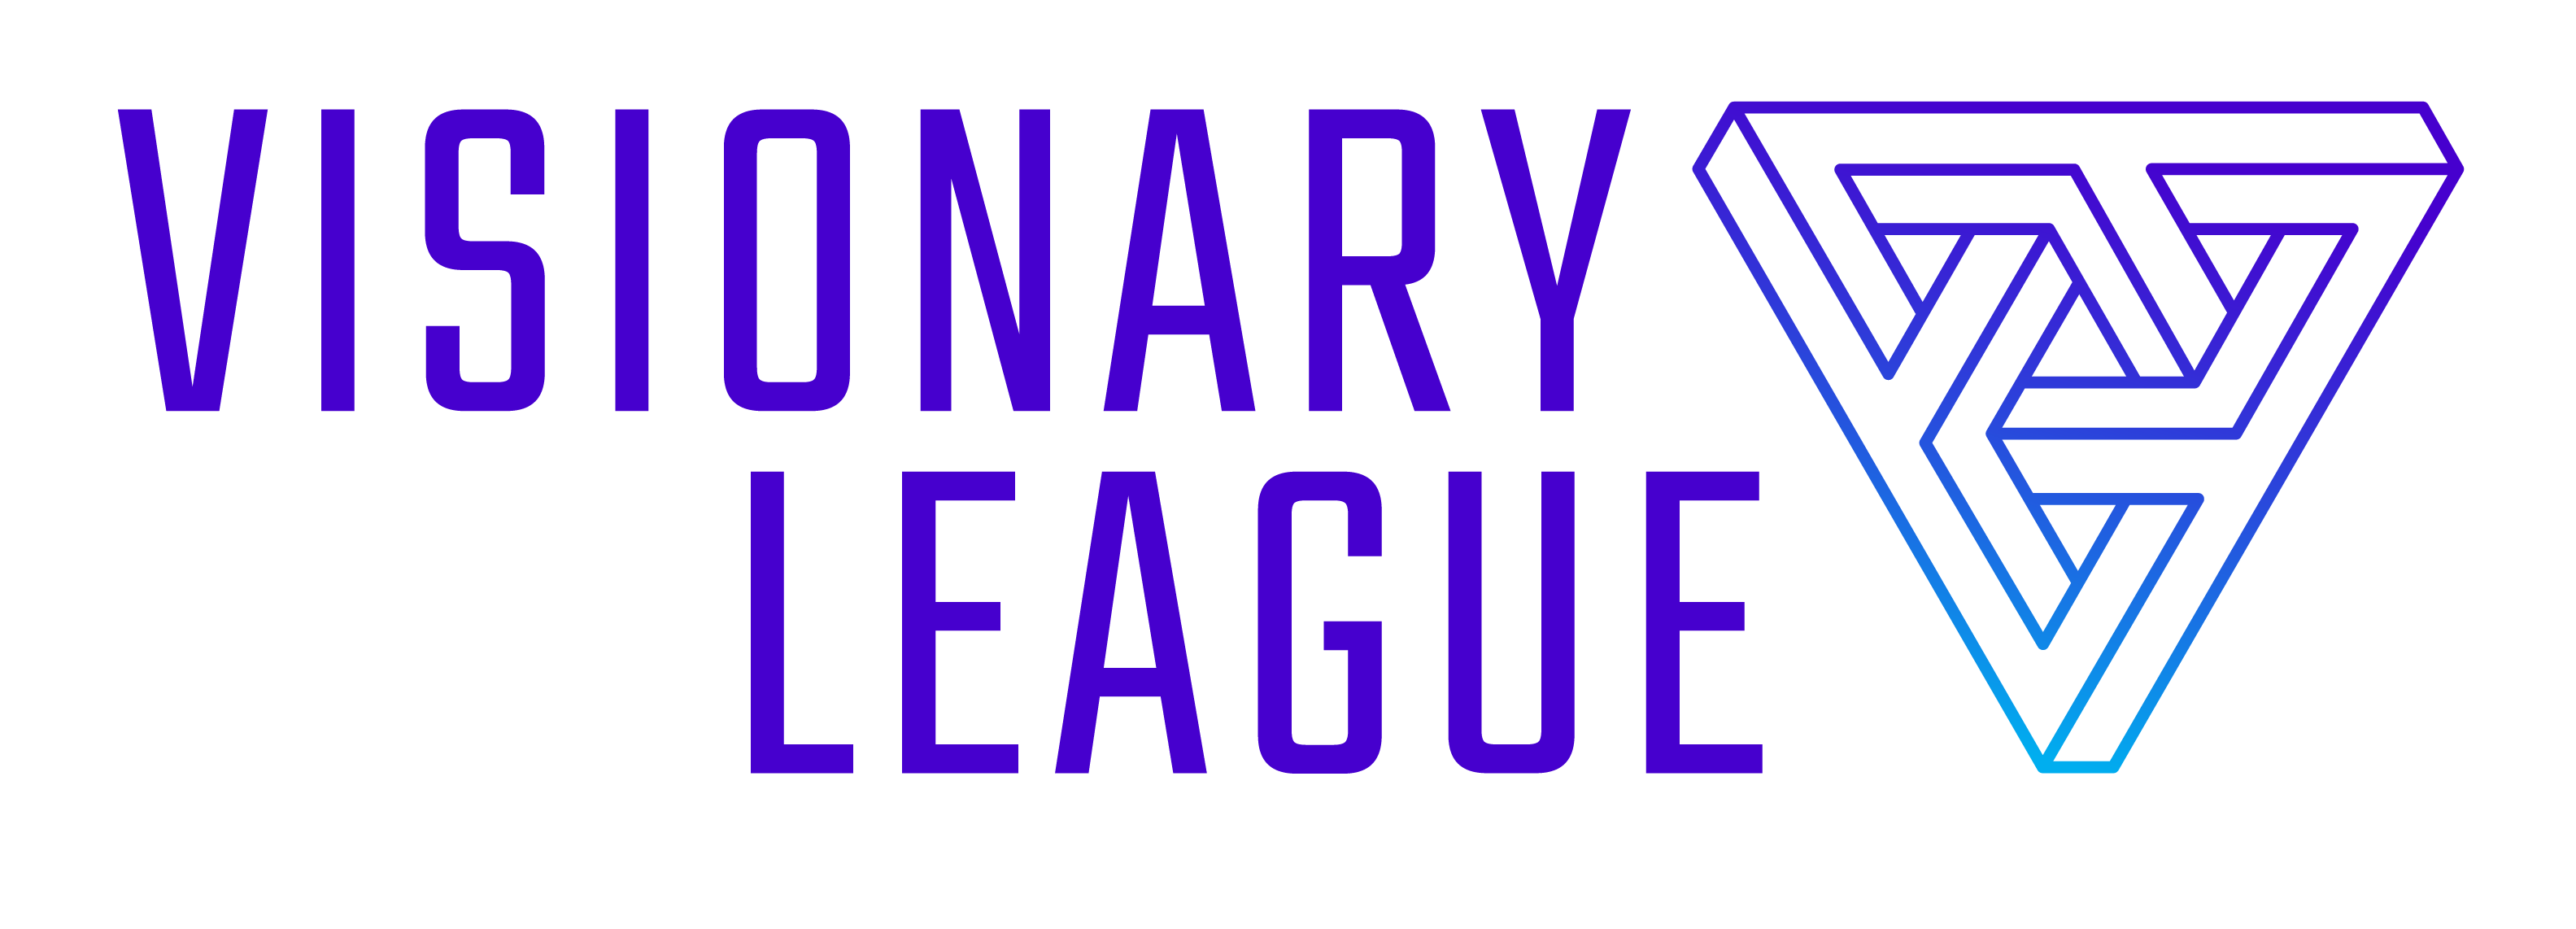 Visionary League